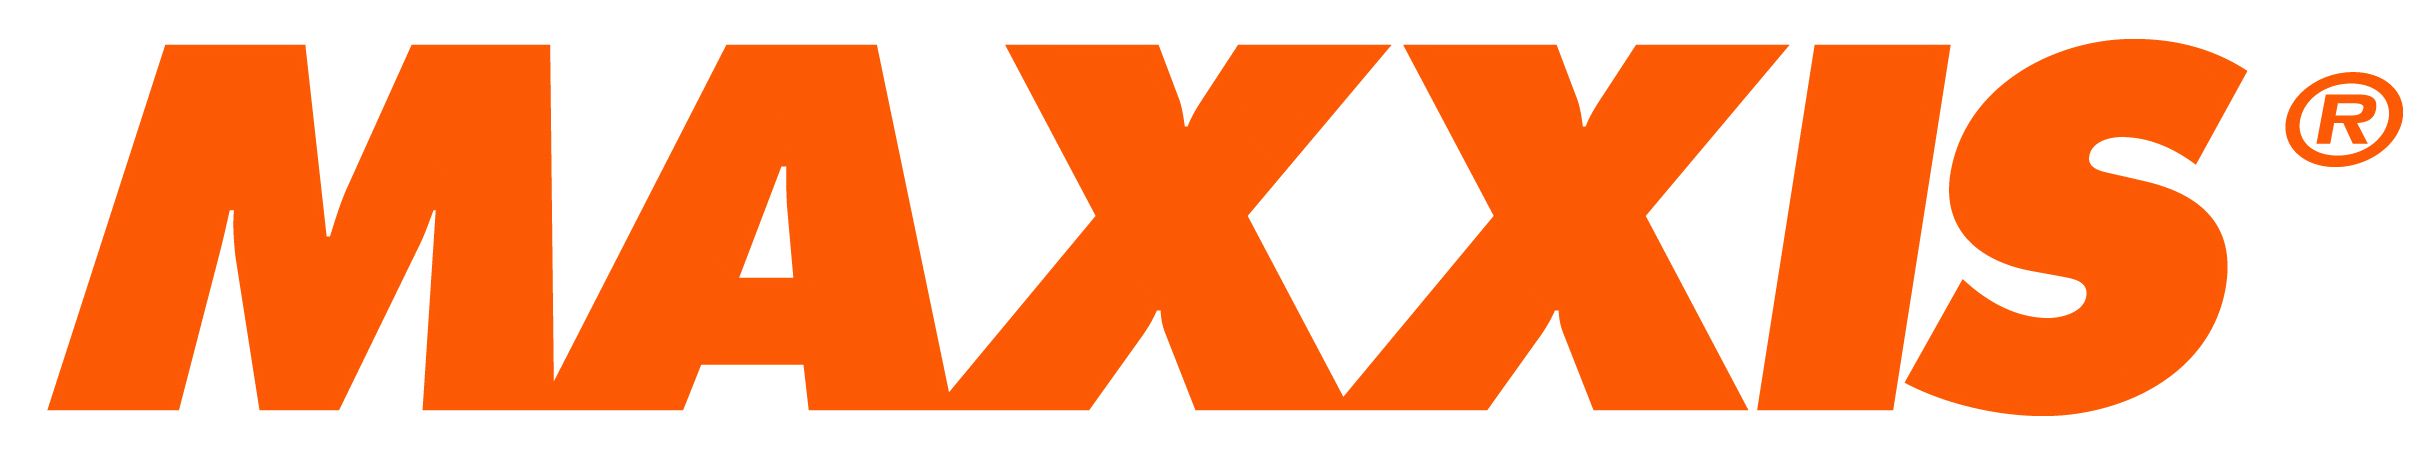 Maxxis Logo Wallpaper